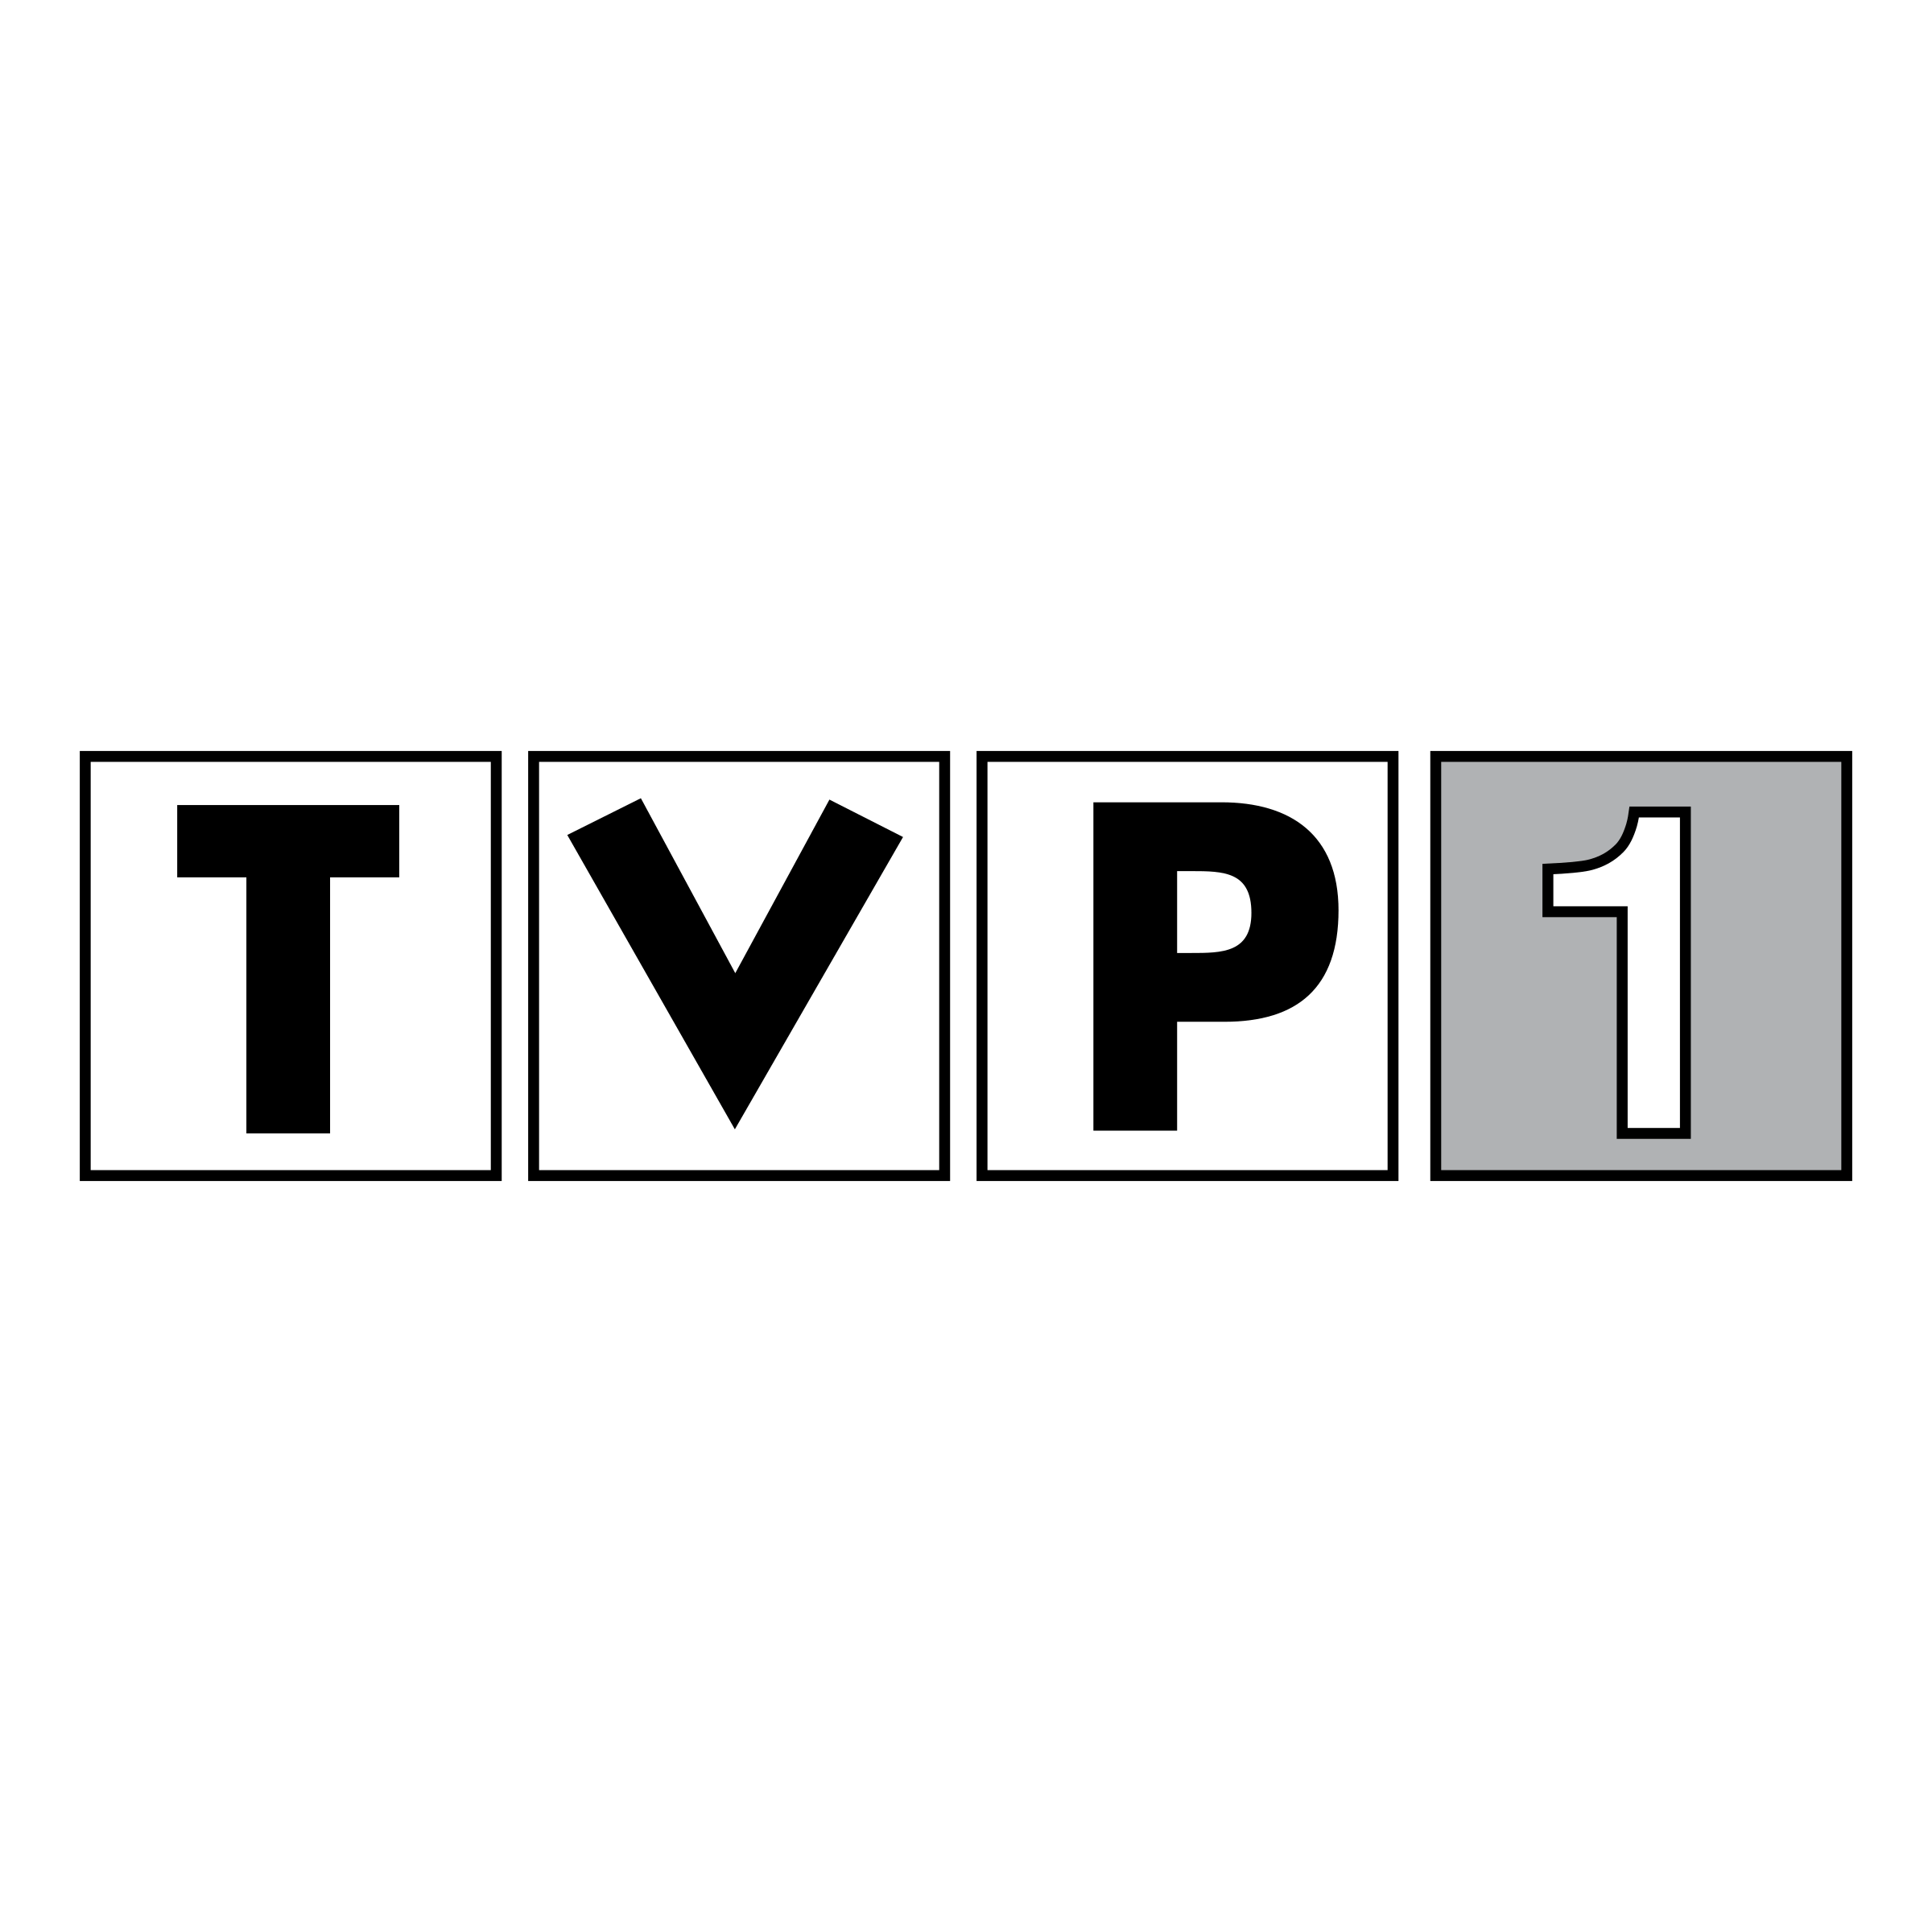 TVP Logo - TVP 1 Logo PNG Transparent & SVG Vector